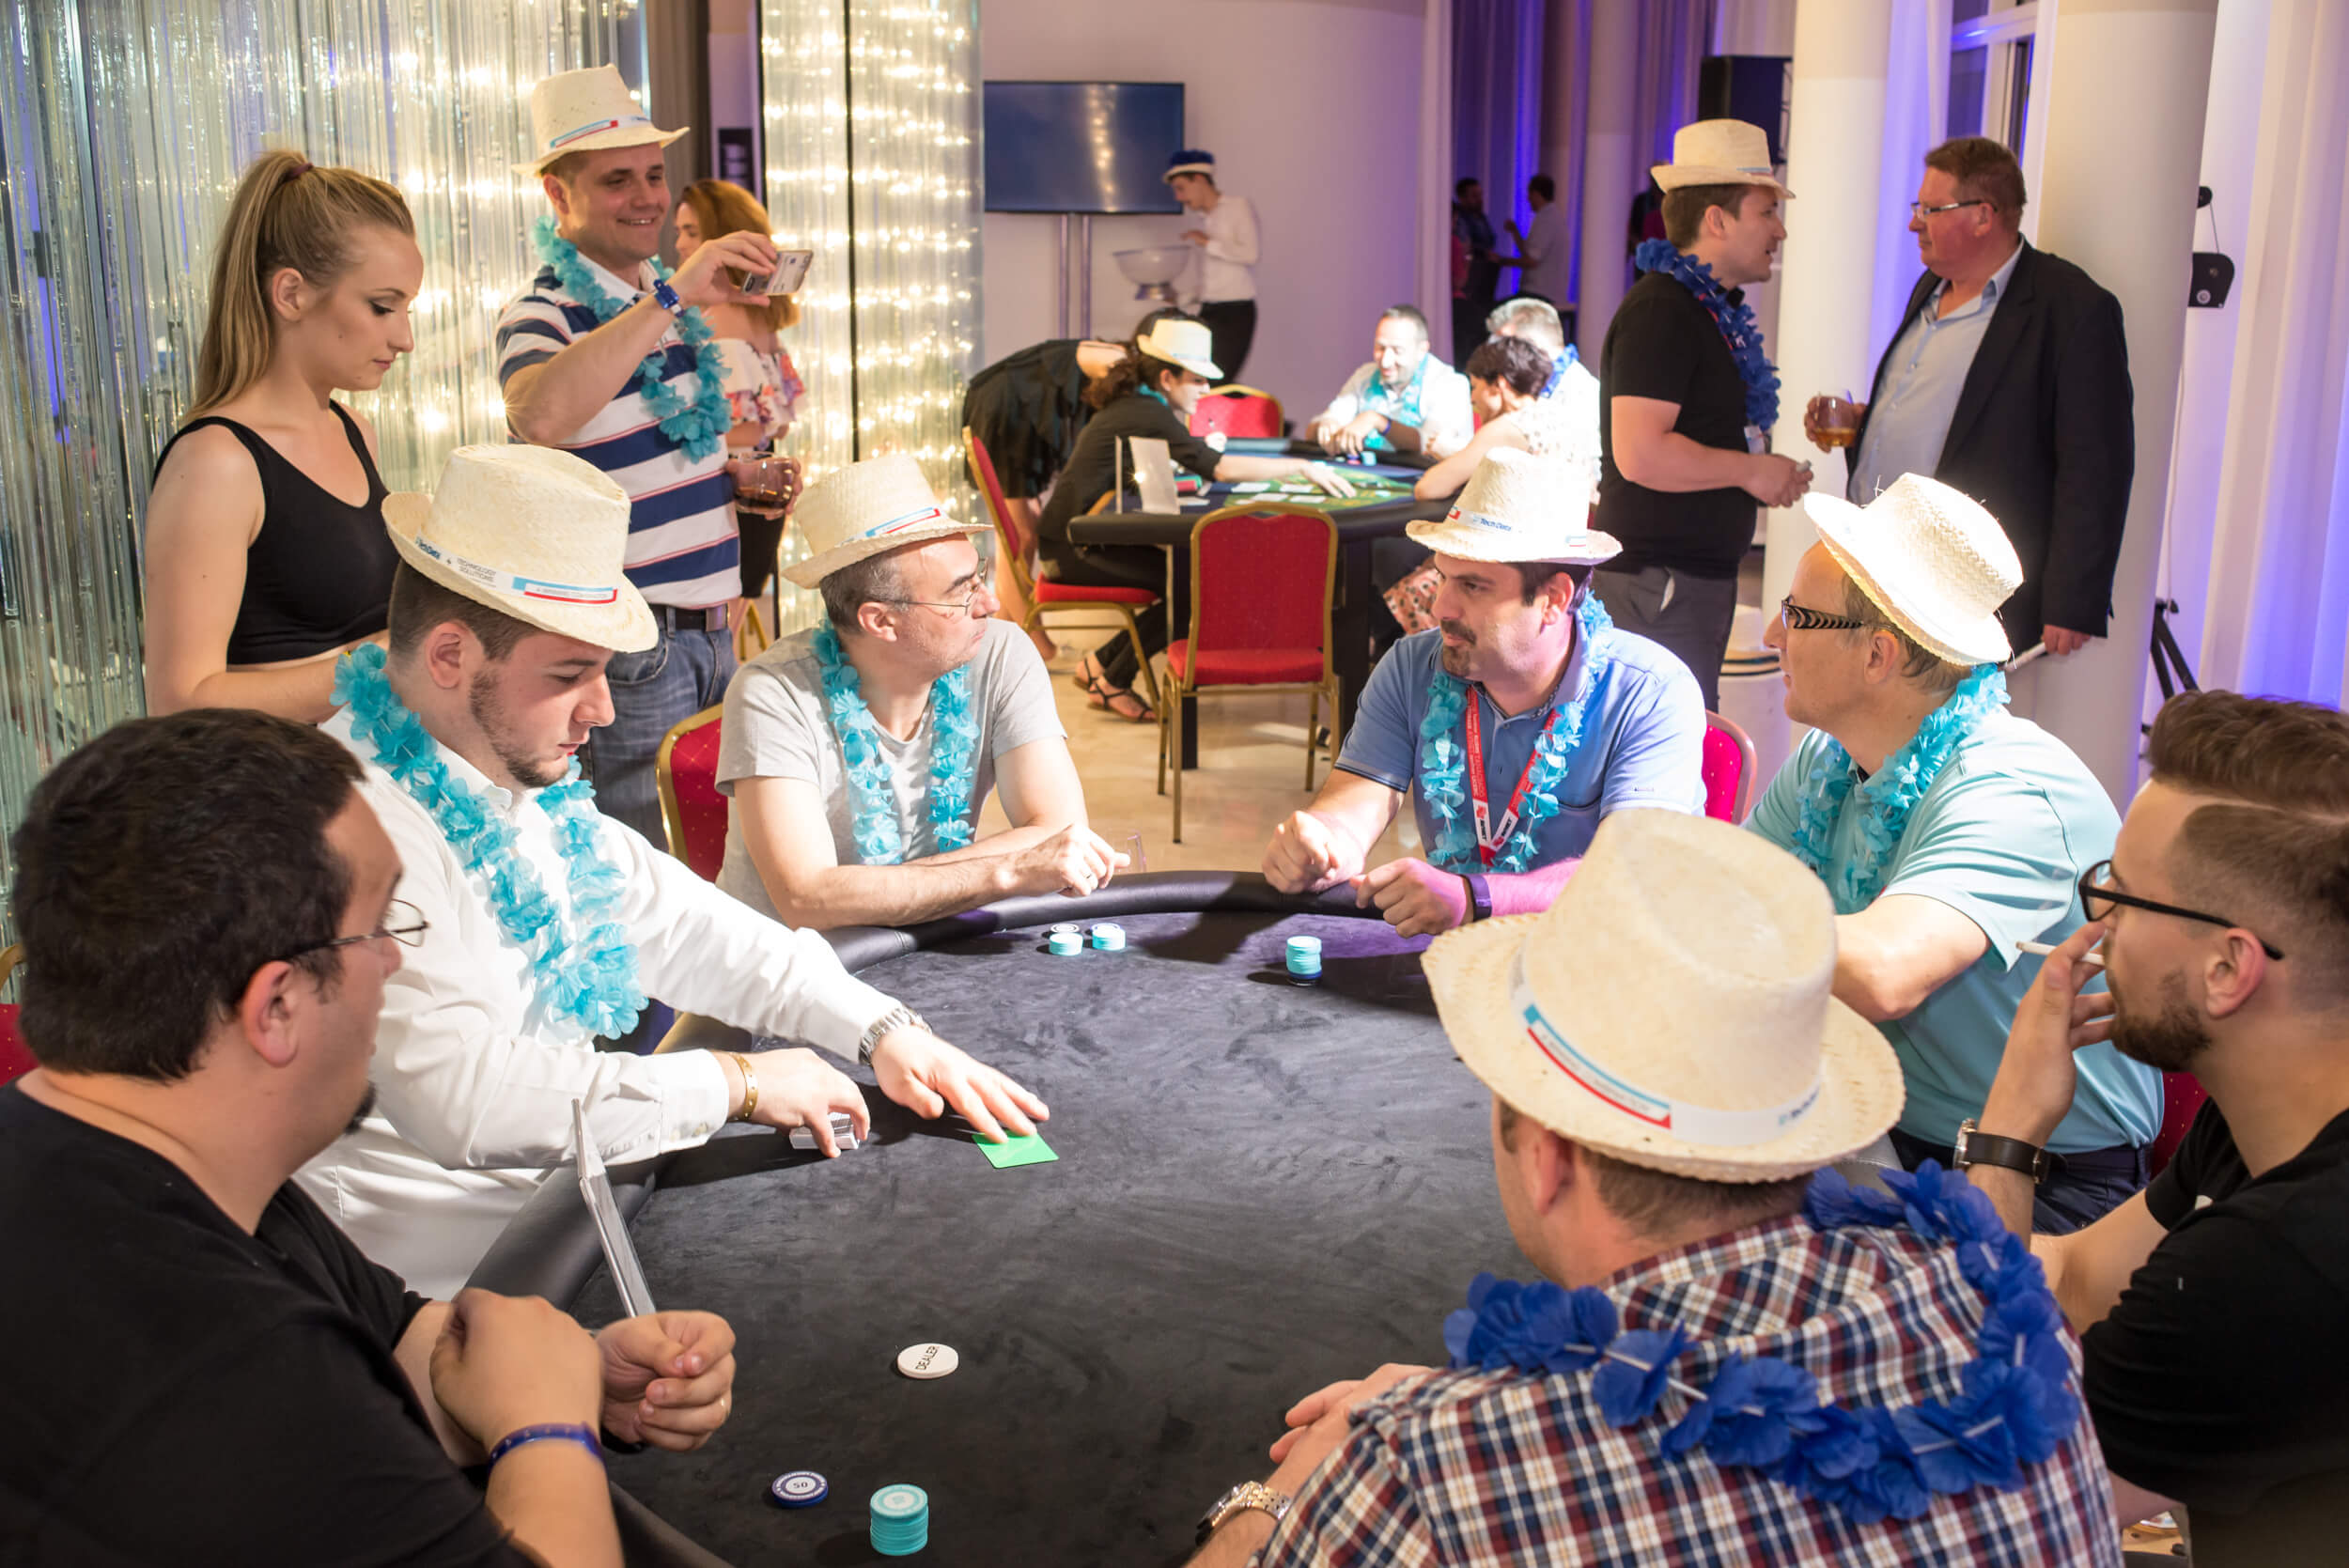 Cuba party event Texas Hold'em poker